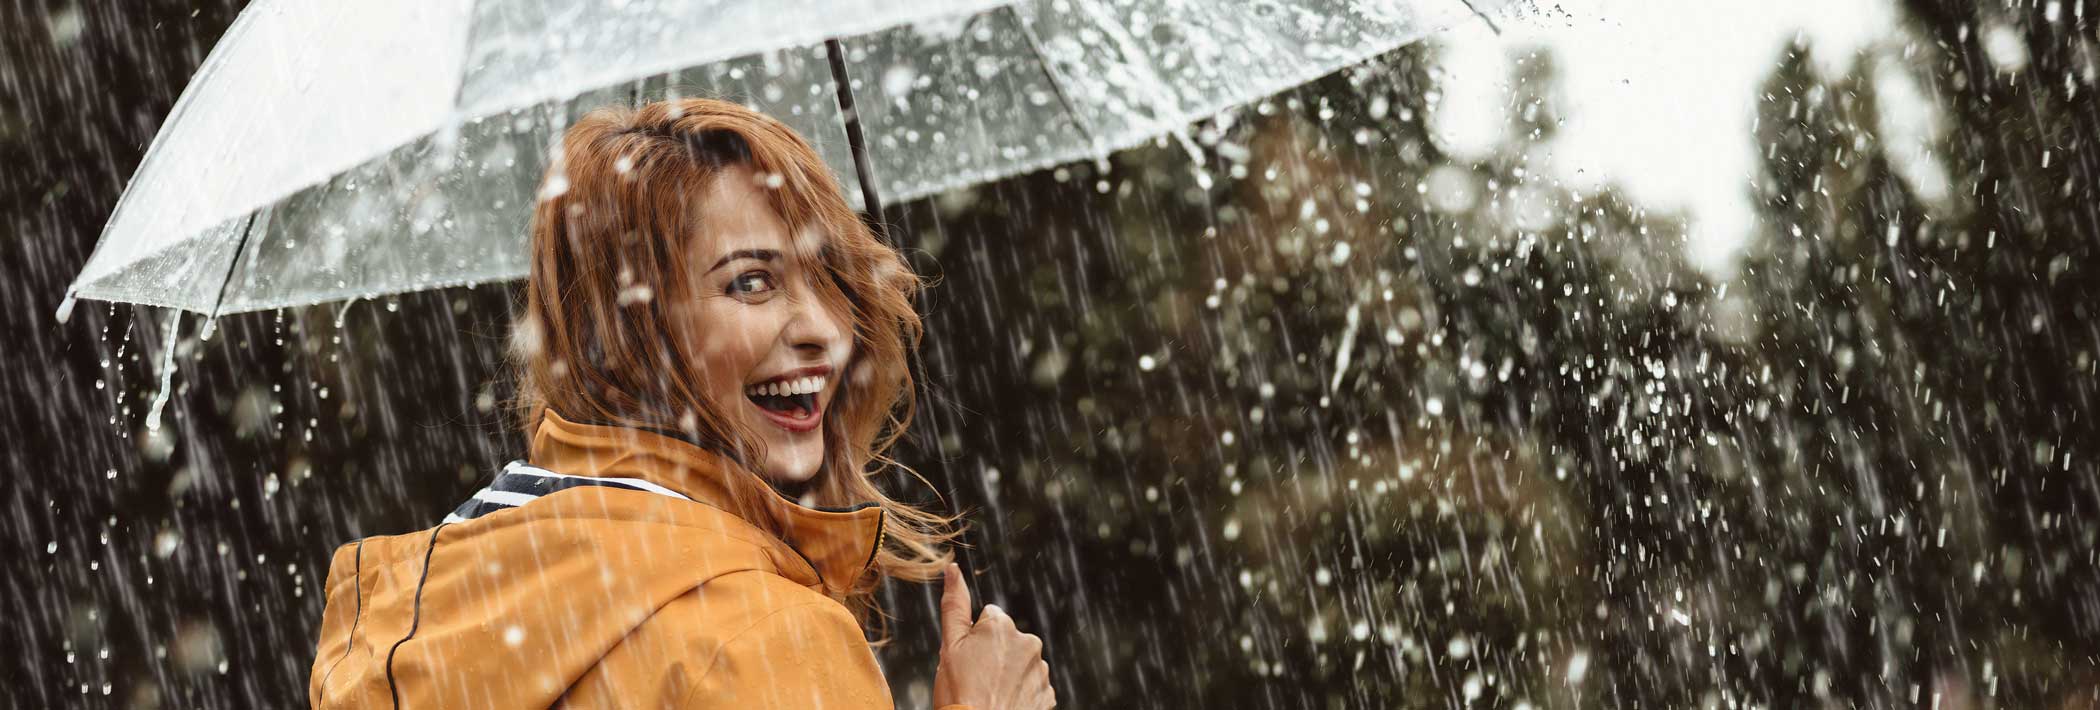 A joyful woman with an umbrella looks over her shoulder